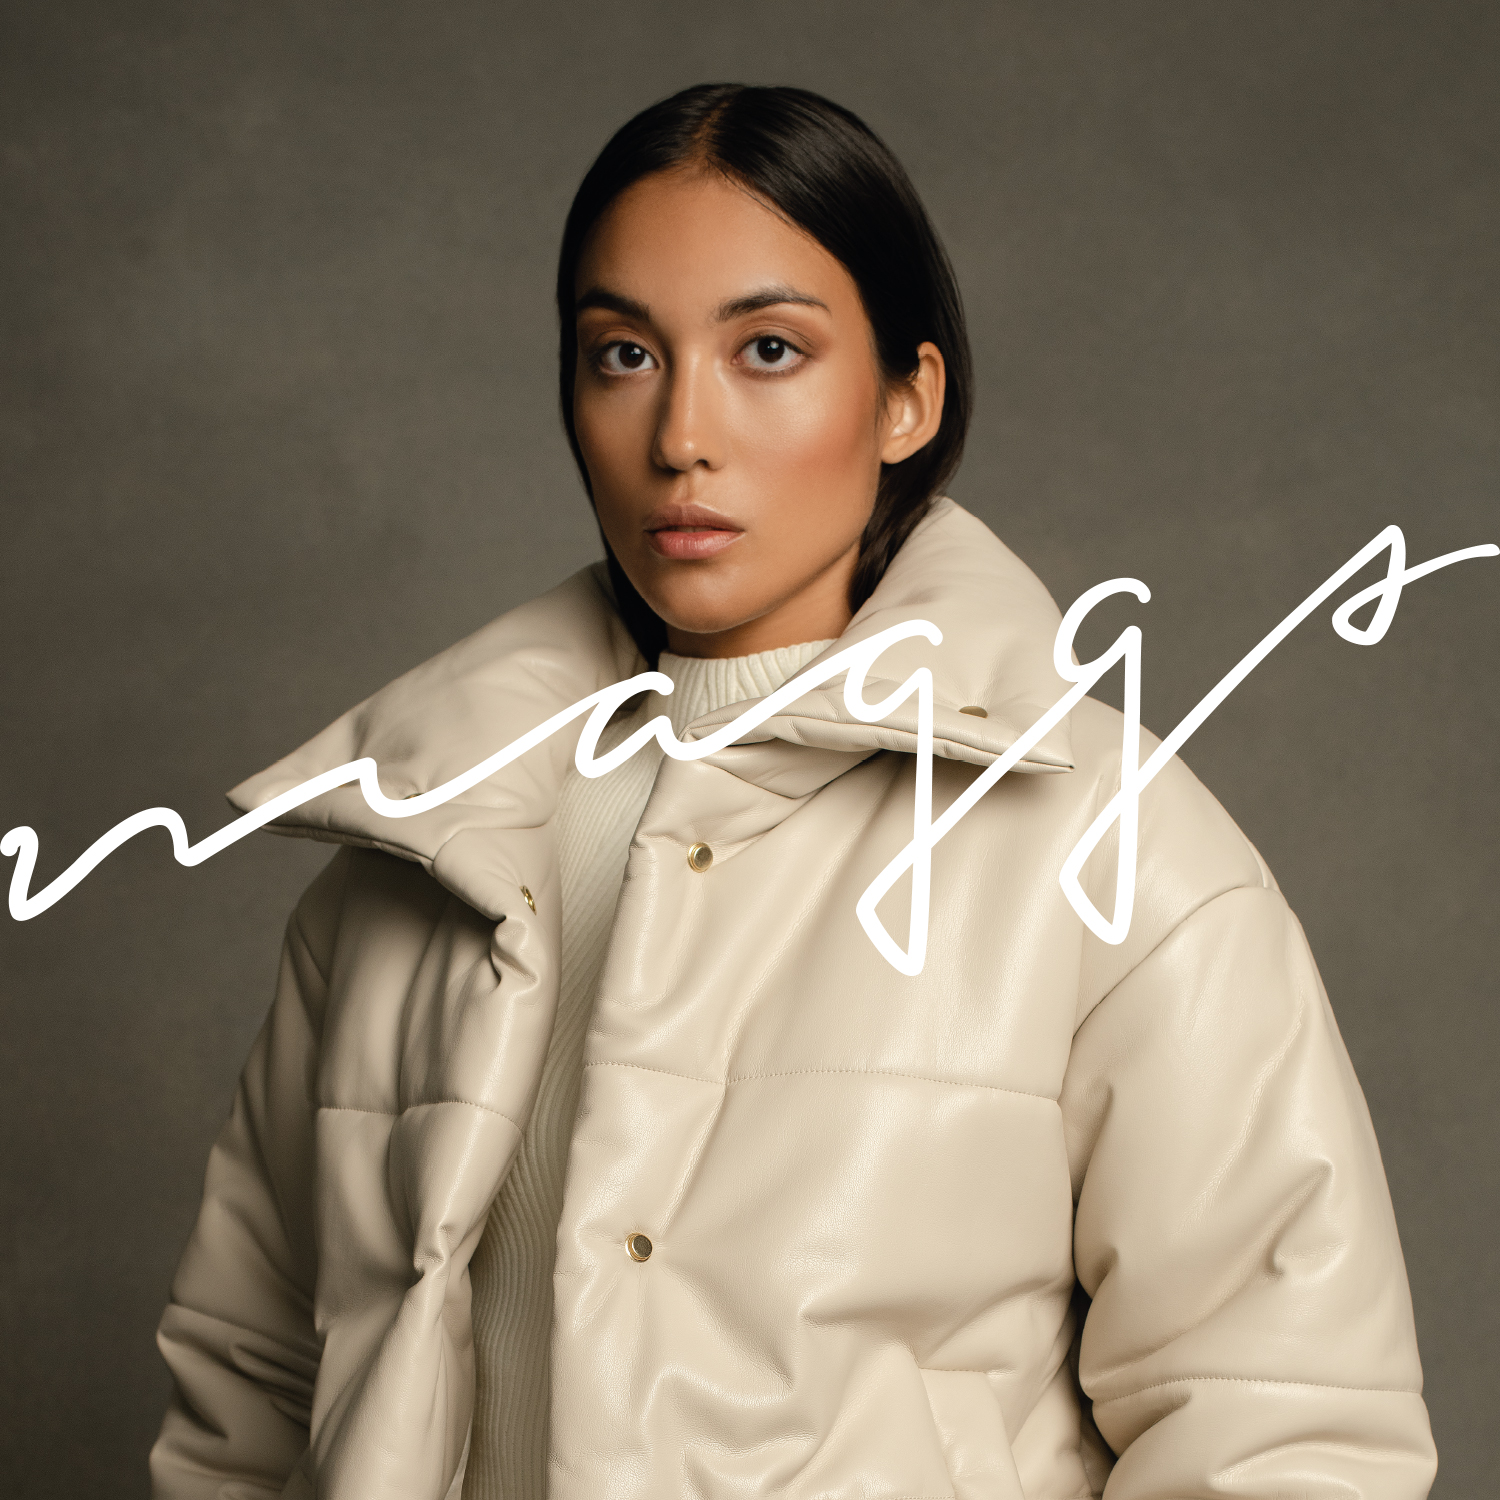 Model trägt weisse gefütterte Nanushka Jacke. Bild mit MAGGS Logo